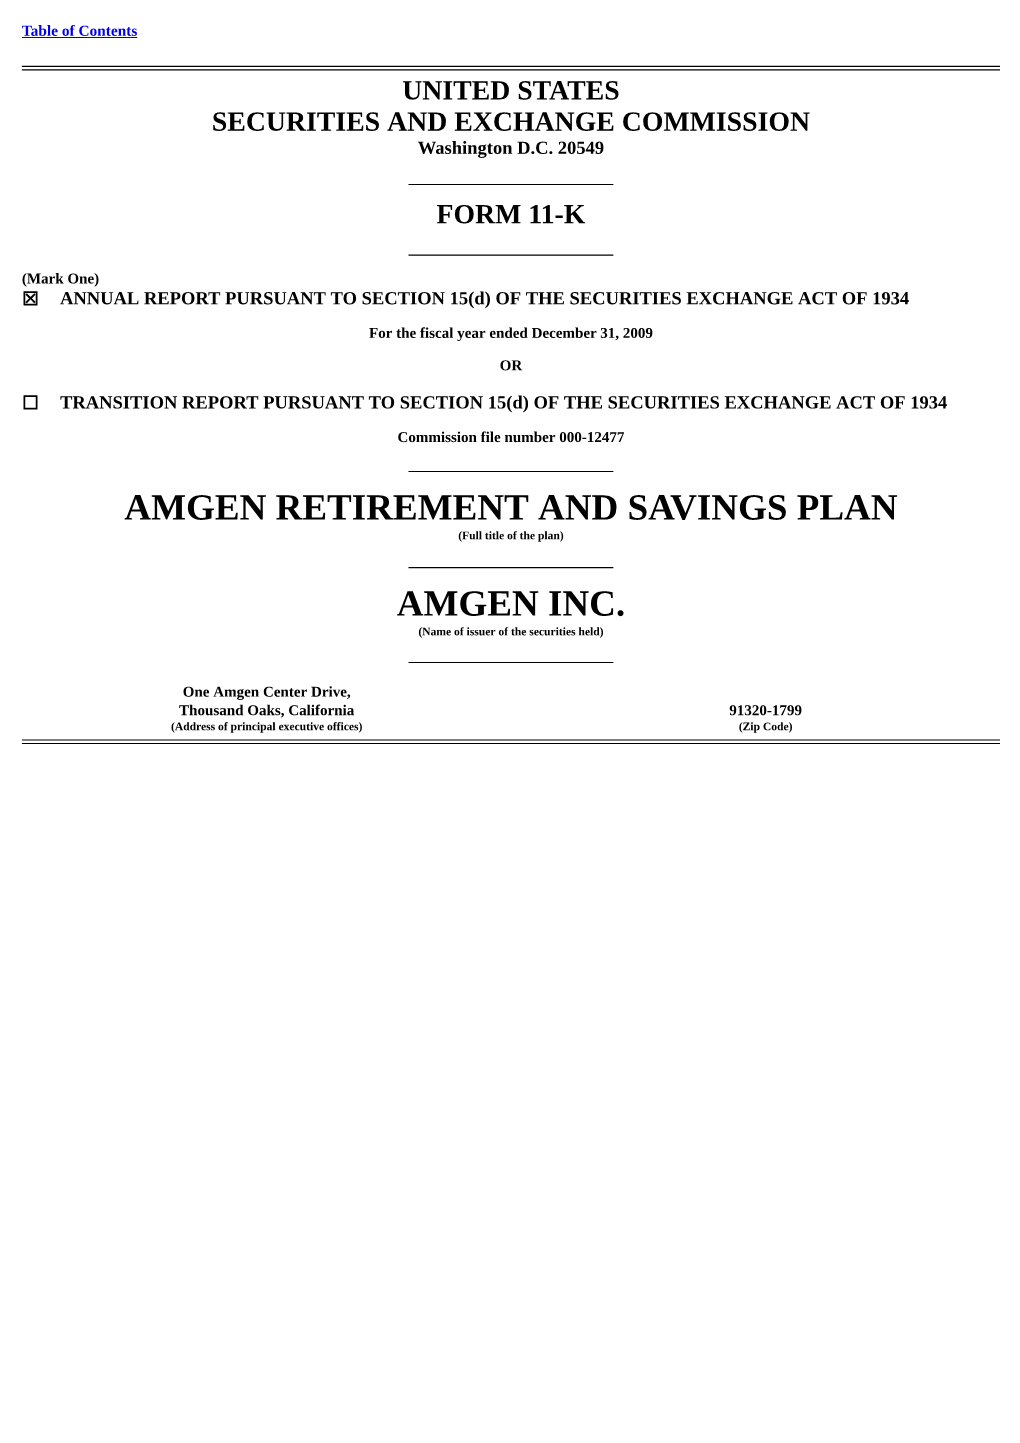 Amgen Retirement and Savings Plan Amgen Inc